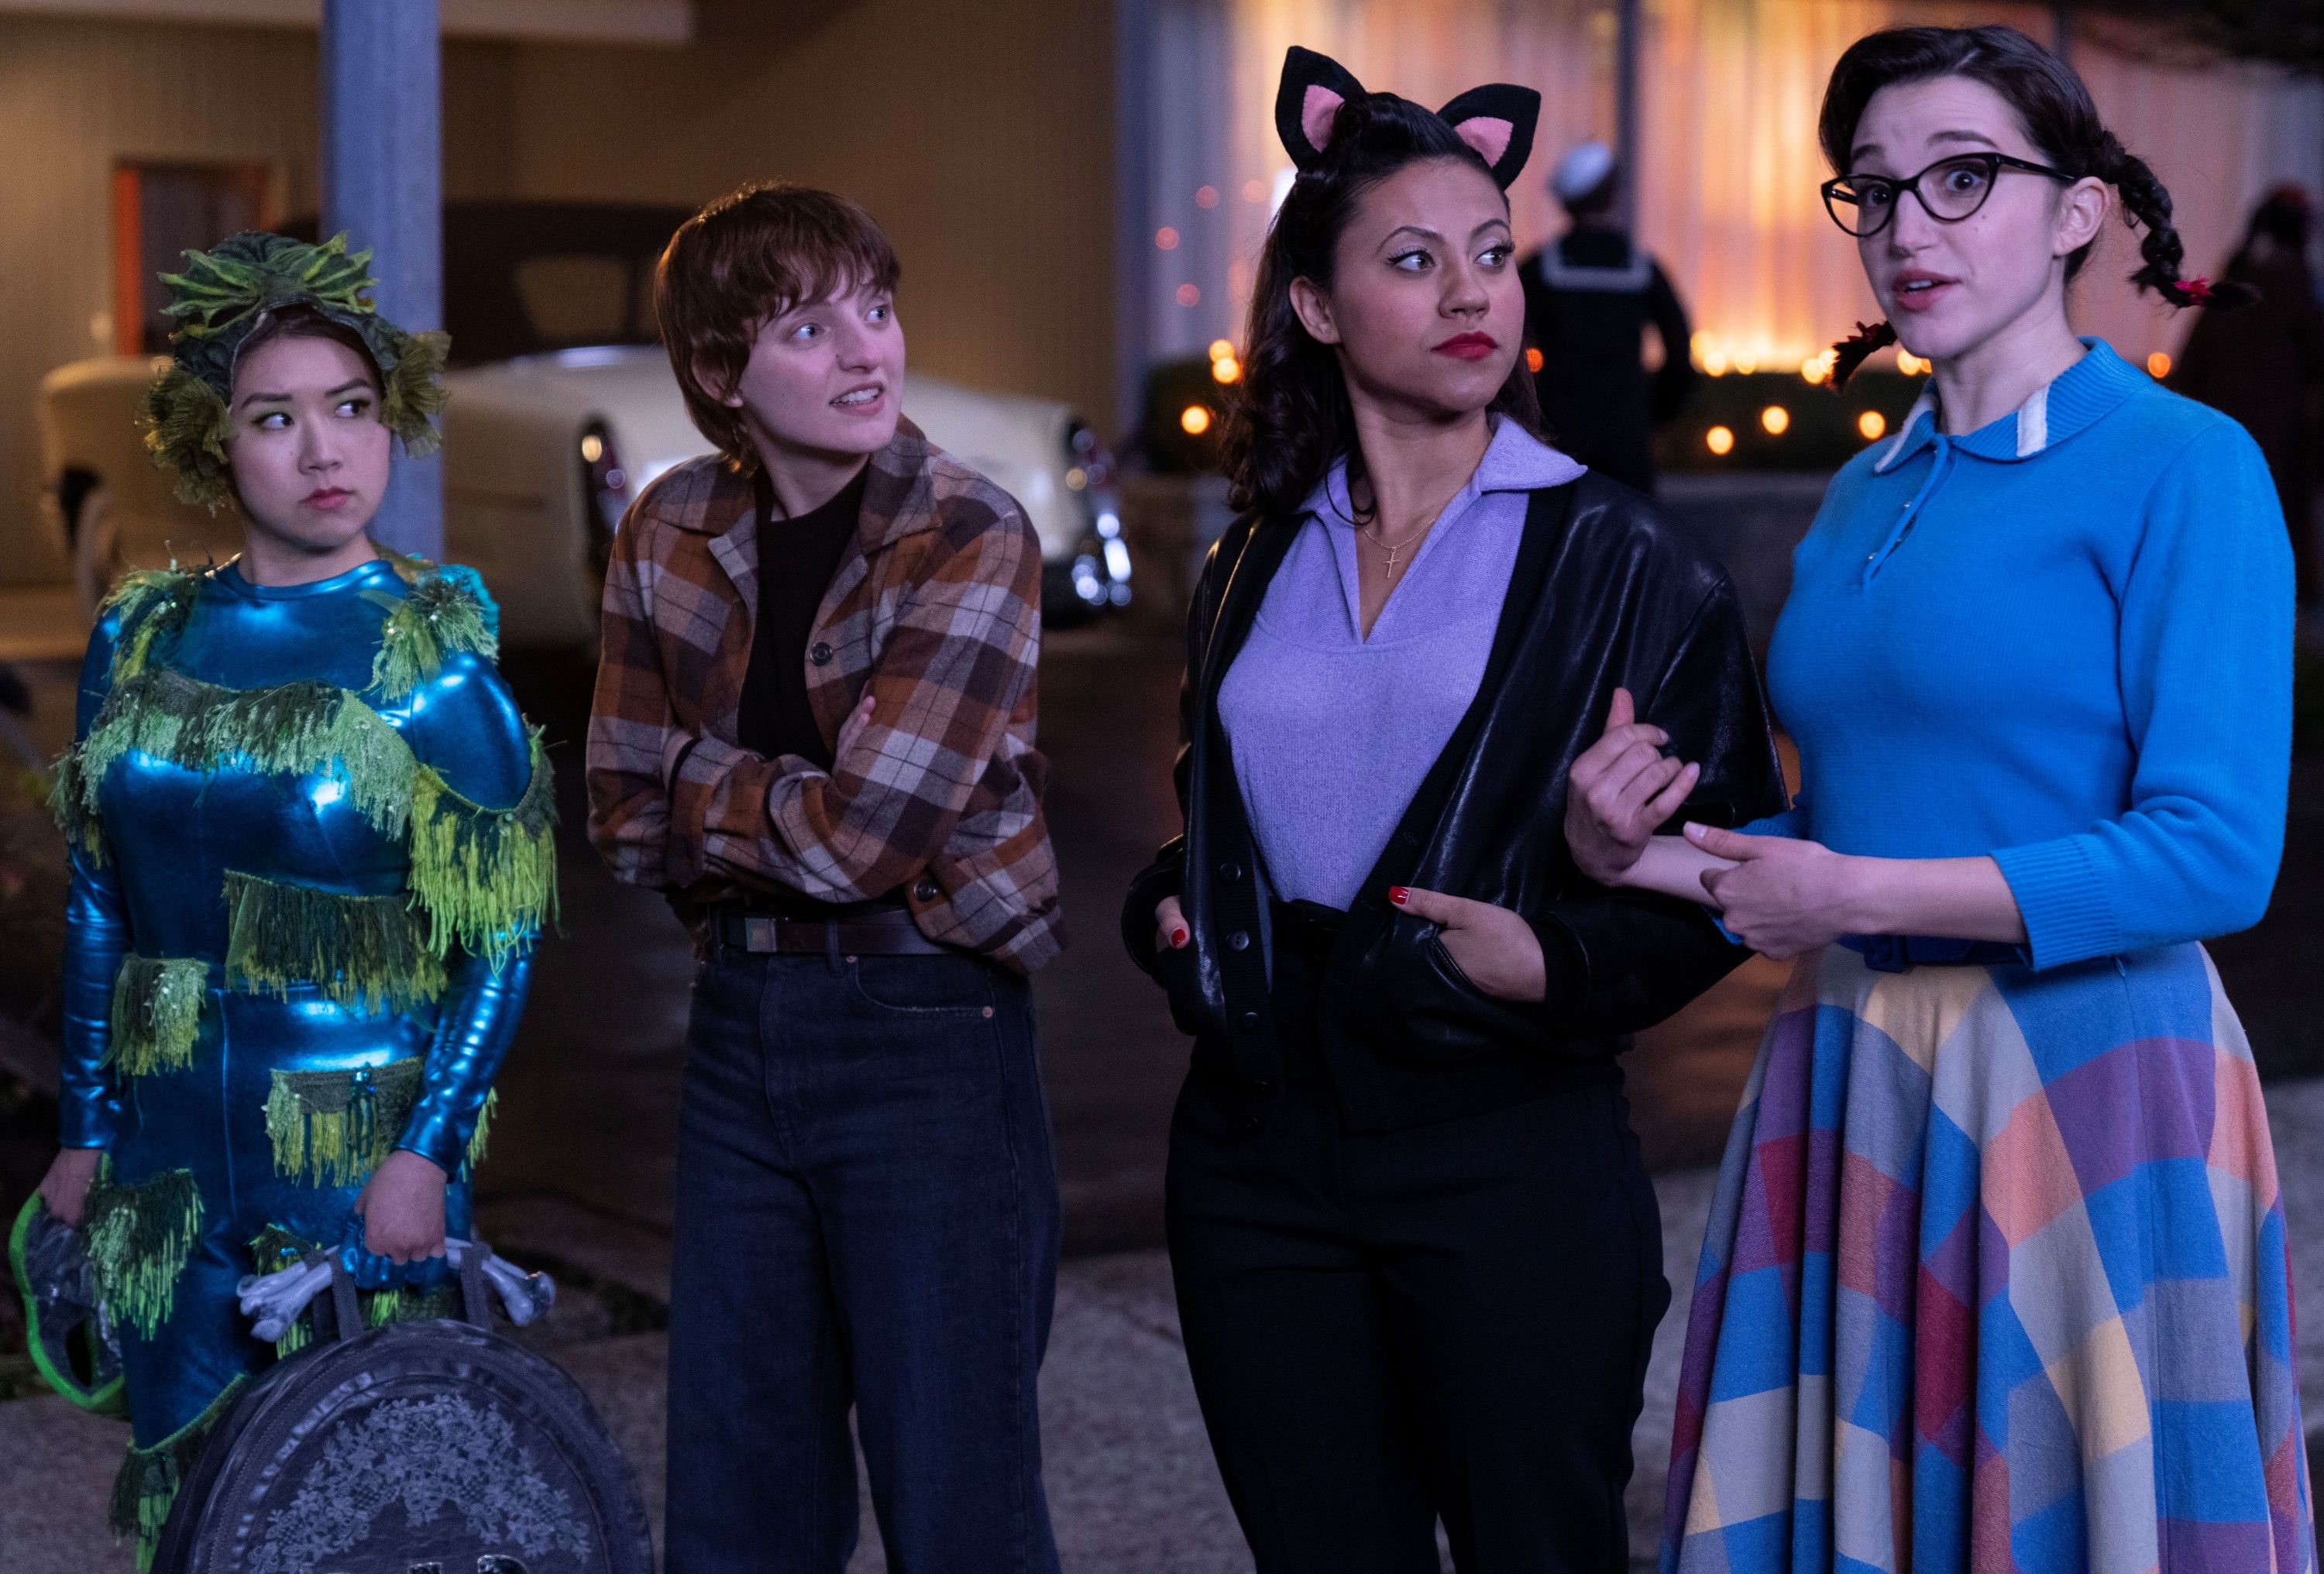 Marisa Davila as Jane, Cheyenne Isabel Wells as Olivia, Tricia Fukuhara as Nancy, and Ari Notartomaso as Cynthia in Grease: Rise of the Pink Ladies